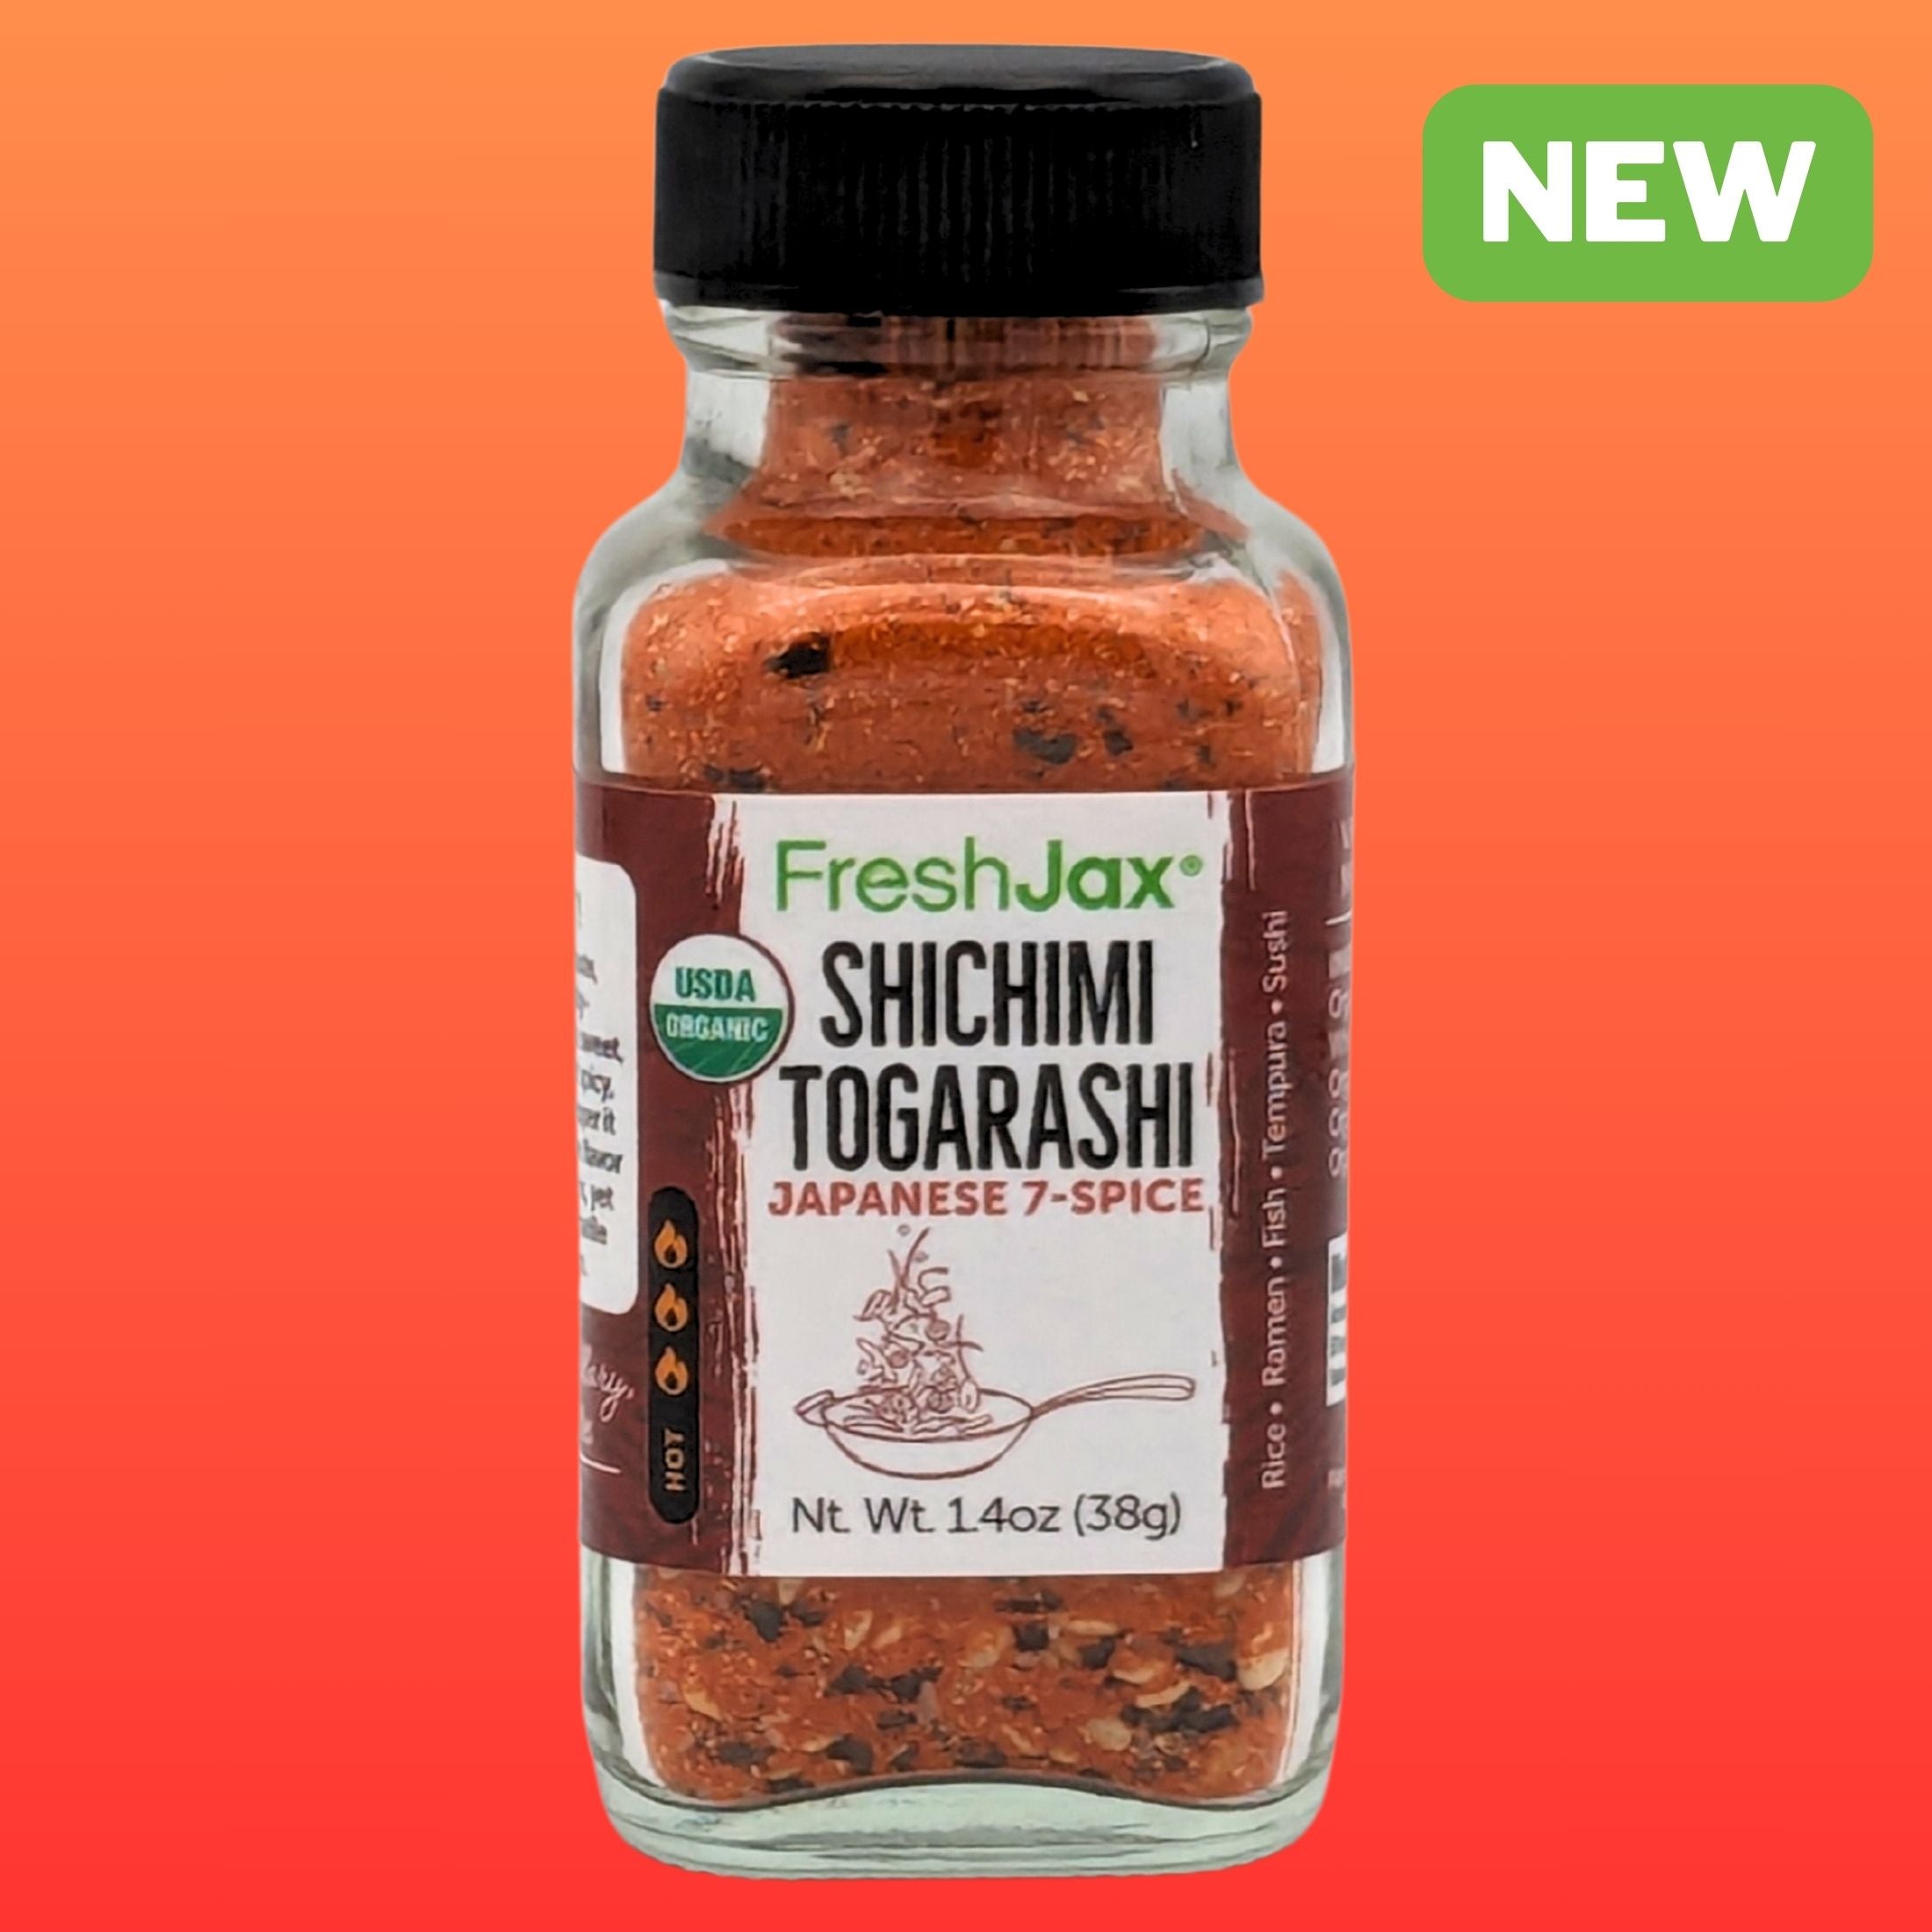 FreshJax Organic Shichimi Togarashi (Japanese 7-Spice) Sampler